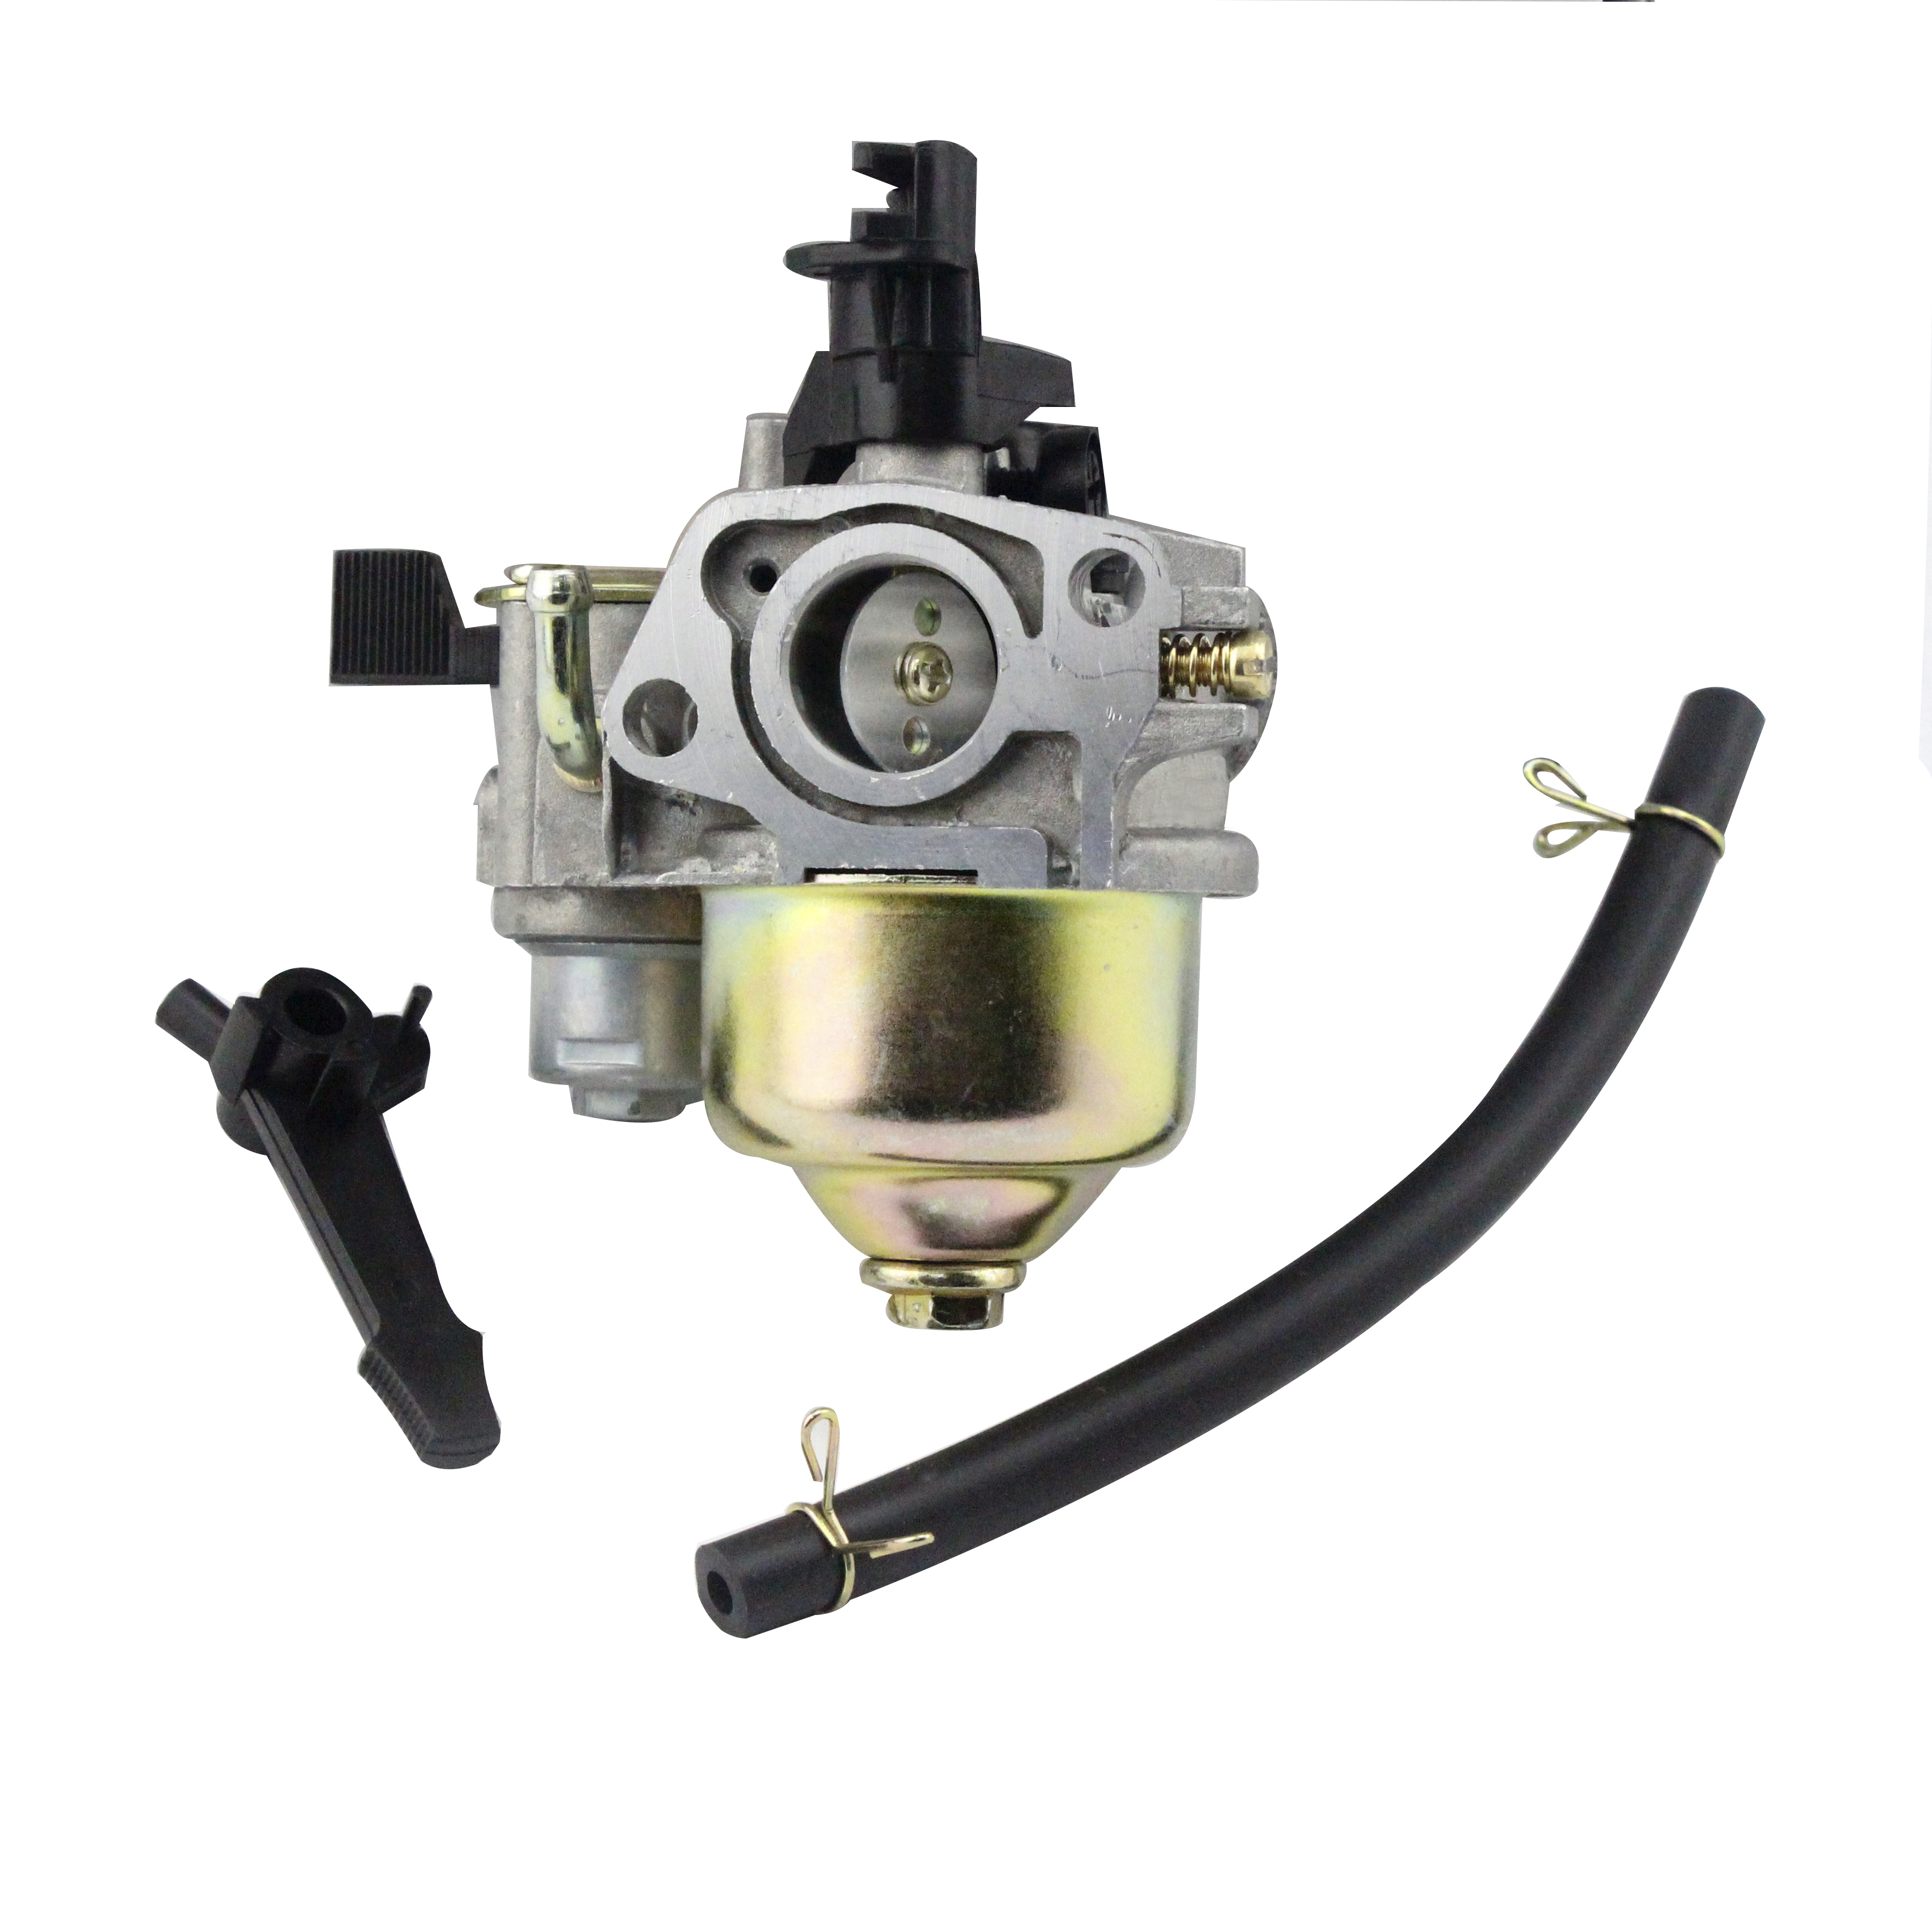 Details about   Carburetor Carb For Honda GX160U1 WME2 engine OEM # 16100-ZH8-W61 